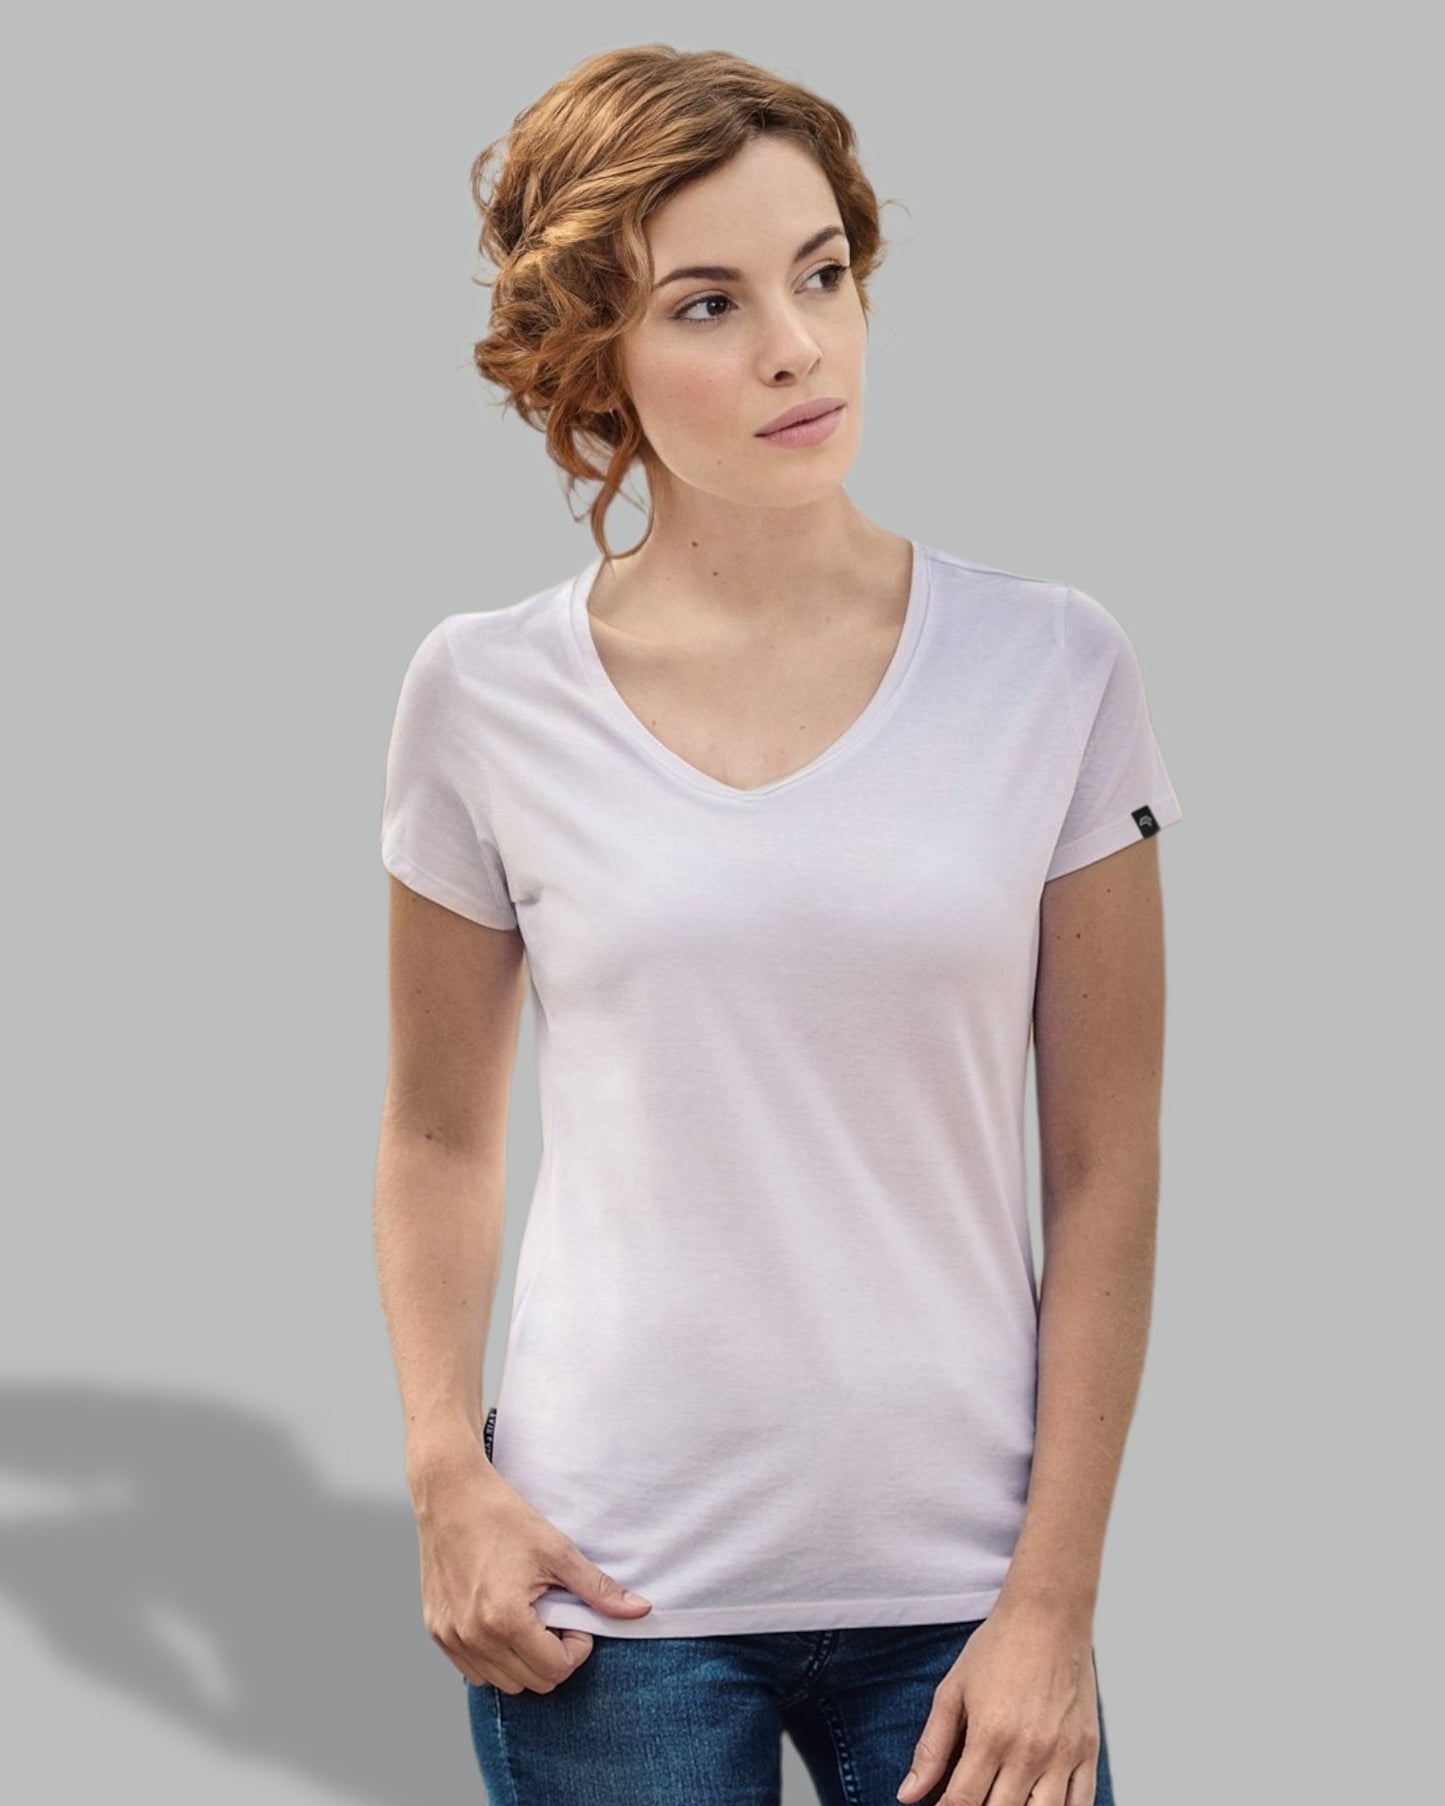 ― % ― RMH 0202/ ― Damen Luxury Bio-Baumwolle V-Neck T-Shirt - Heather Grau Melange [4XL]